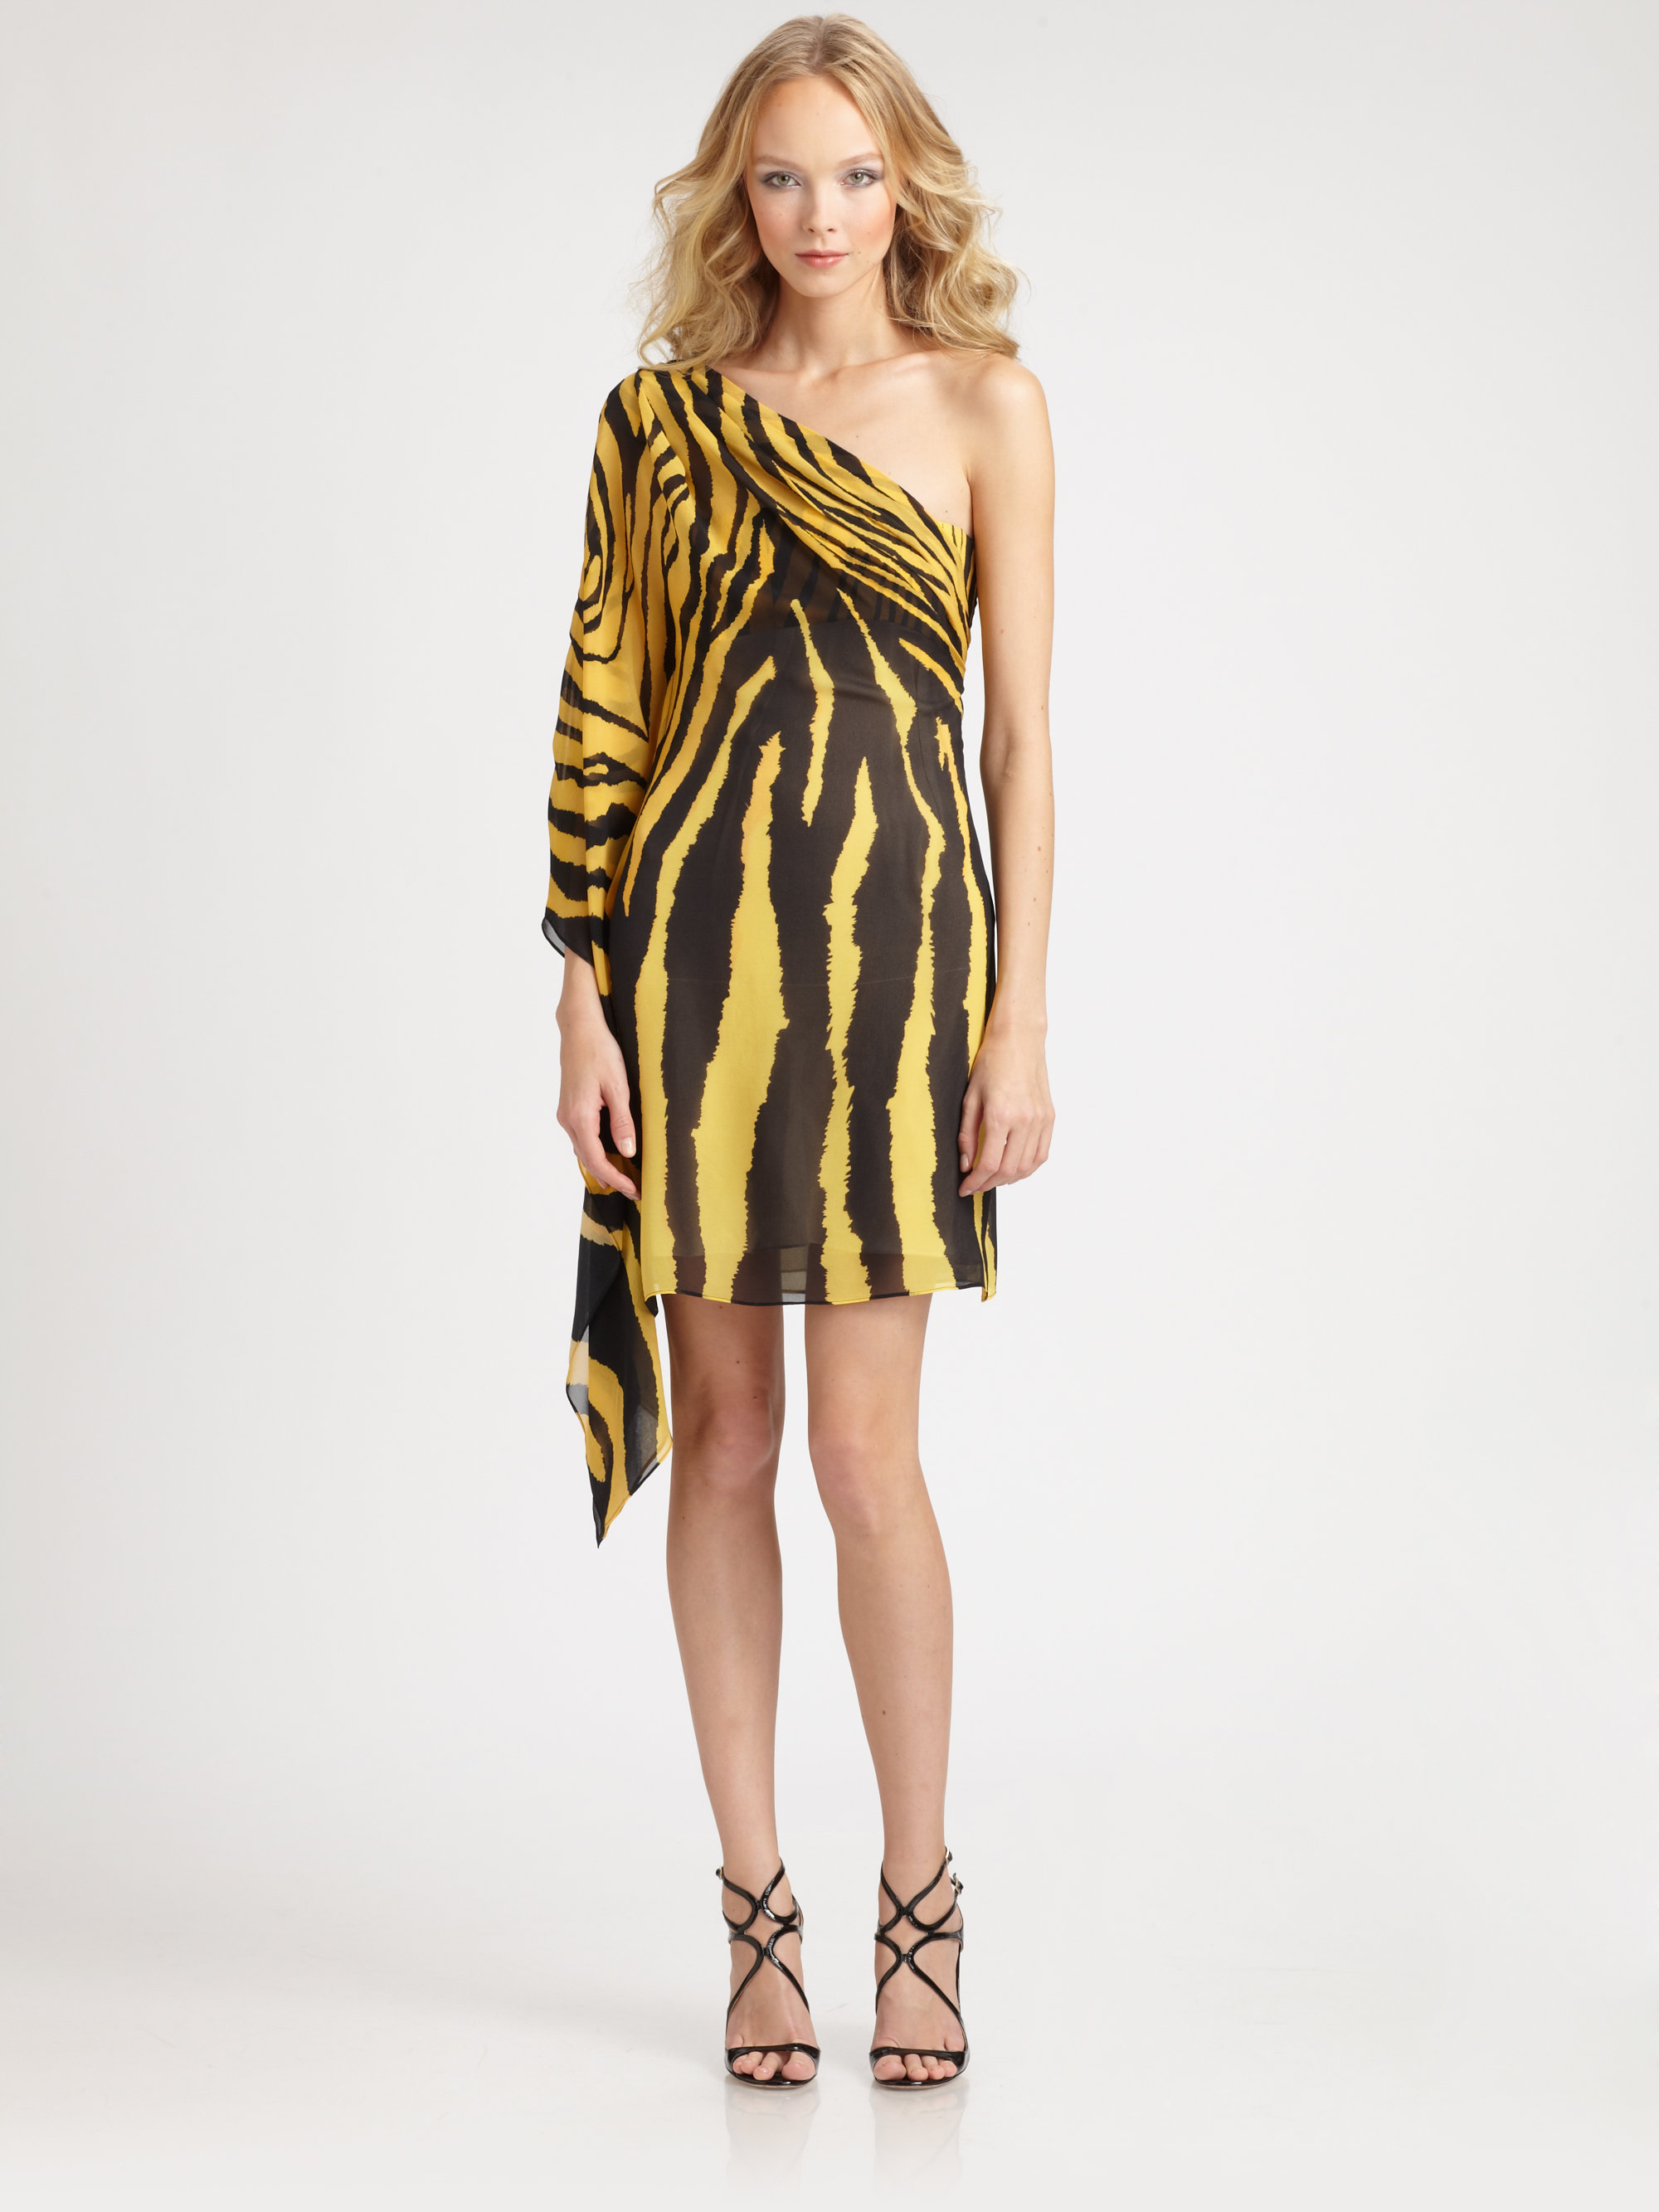 Roberto Cavalli Silk Georgette Zebra Print Dress in Yellow - Lyst